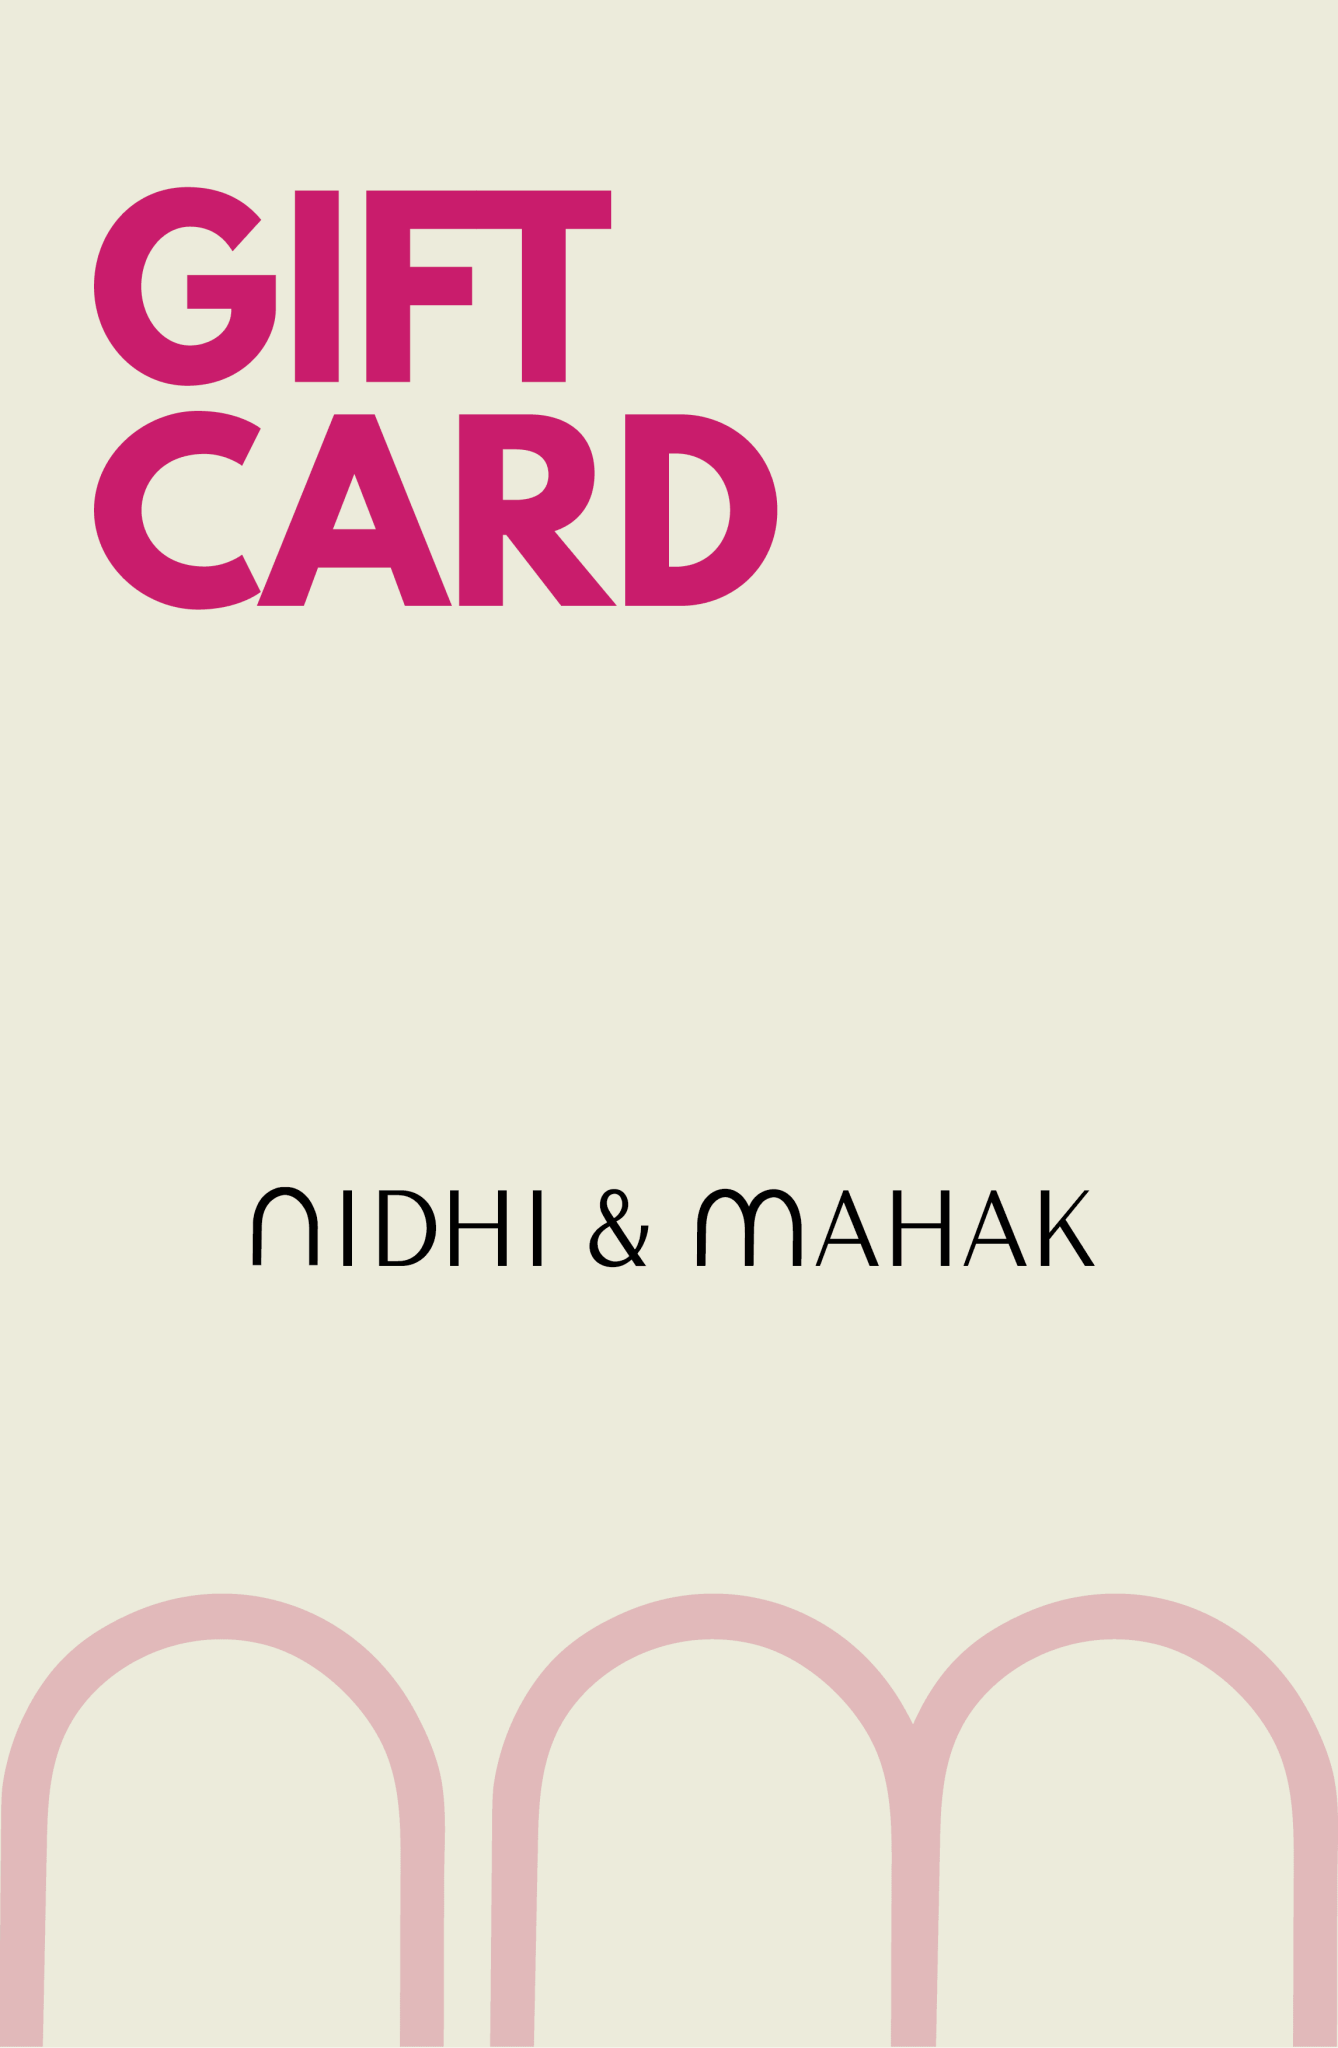 GIFT CARD! - Nidhi and Mahak